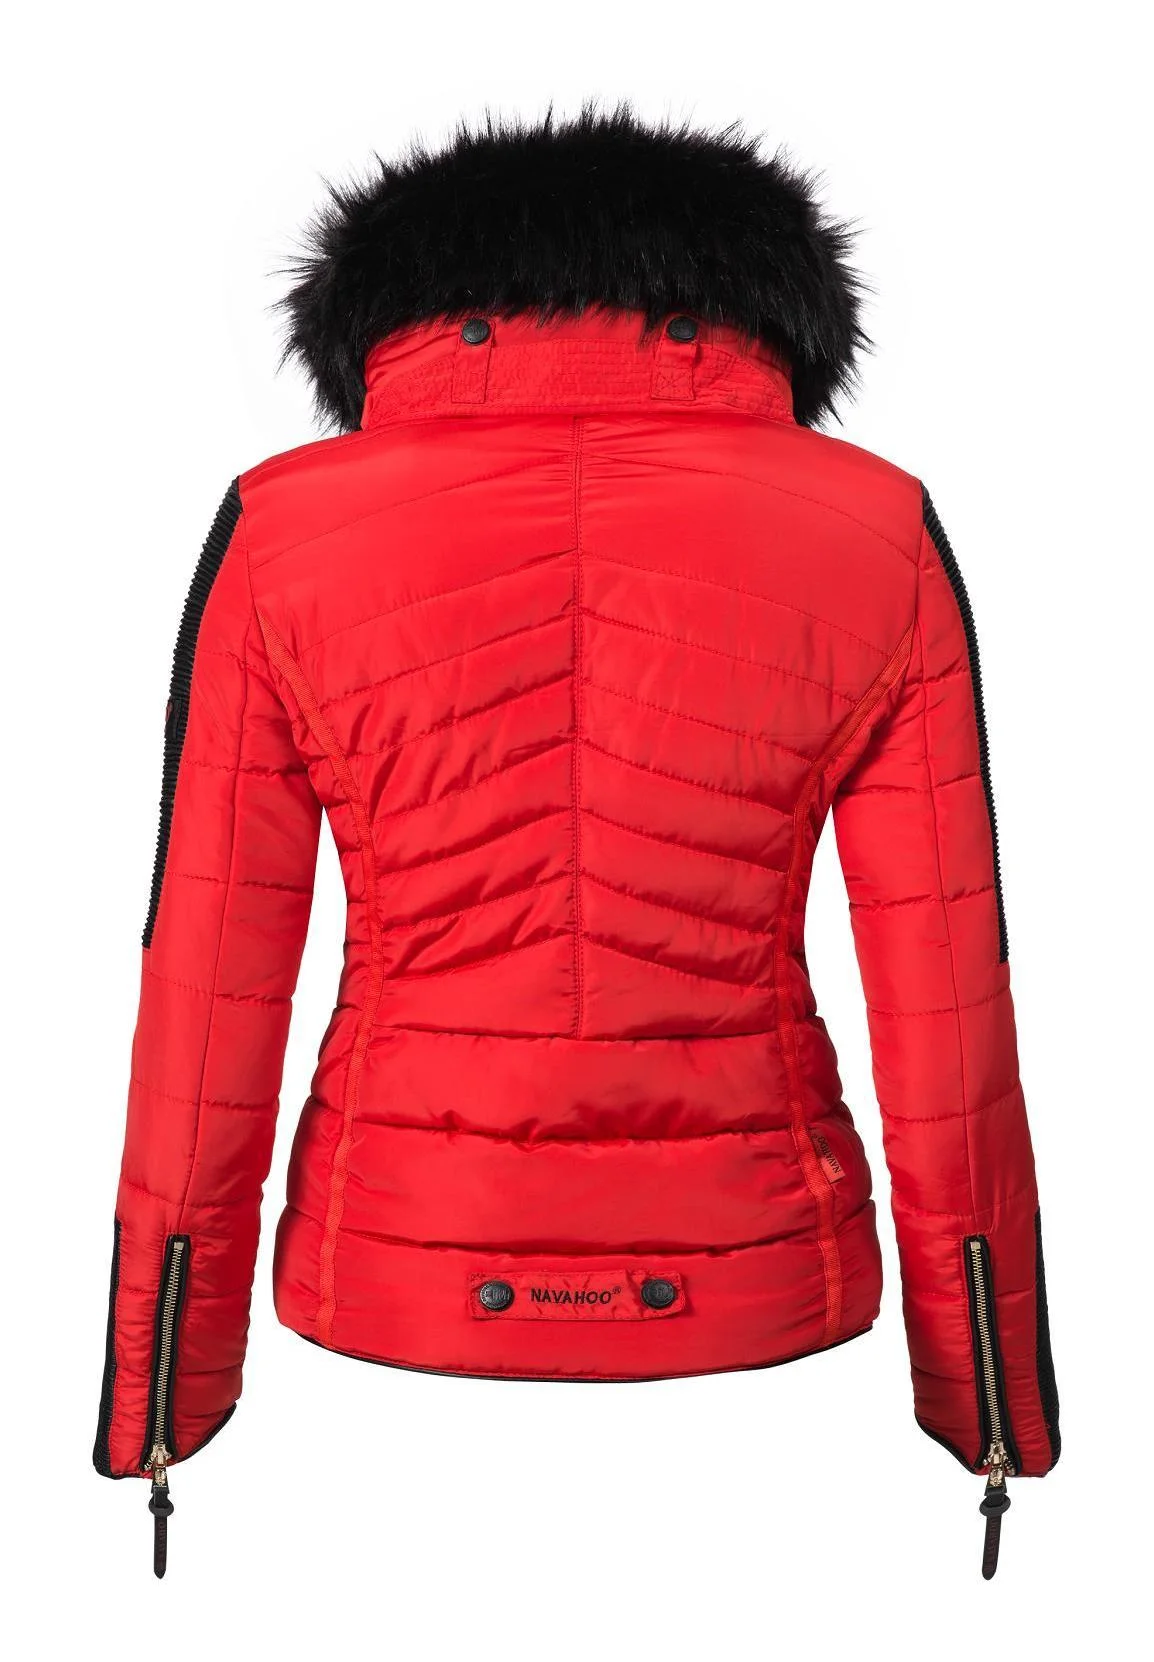 Women's short parka coat red